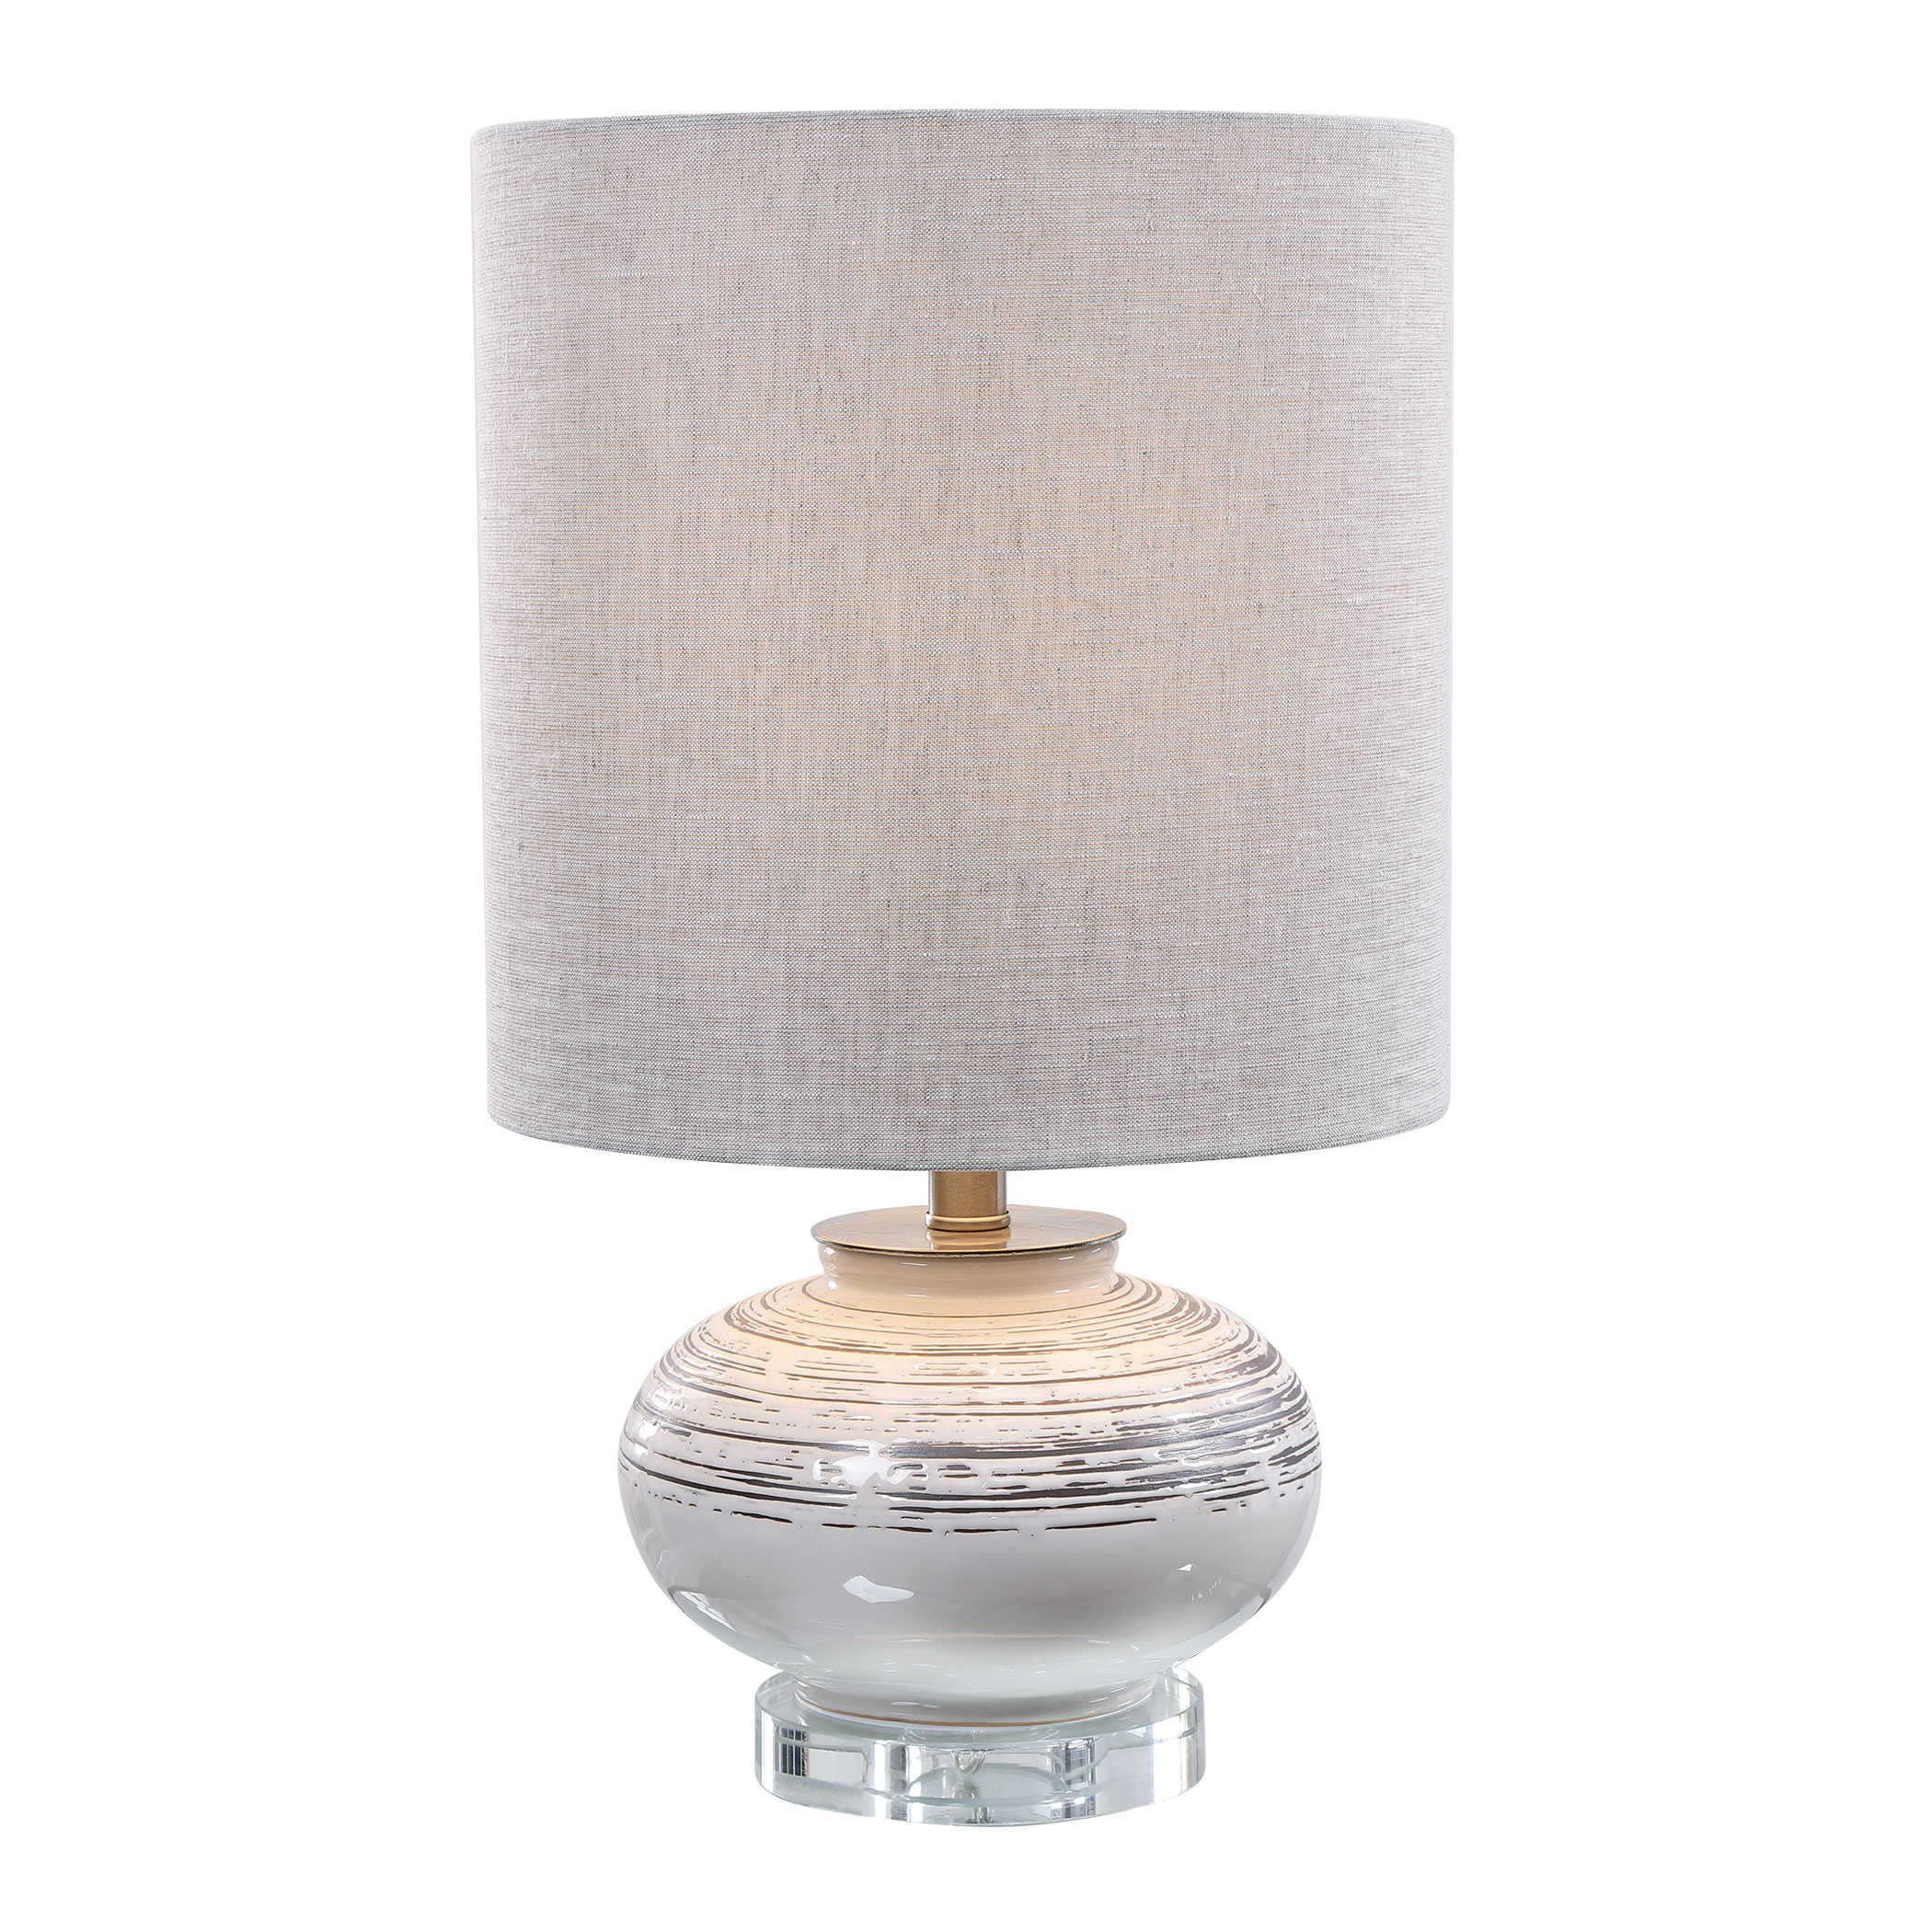 Лампа LENTA ACCENT LAMP 28443-1 Uttermost США